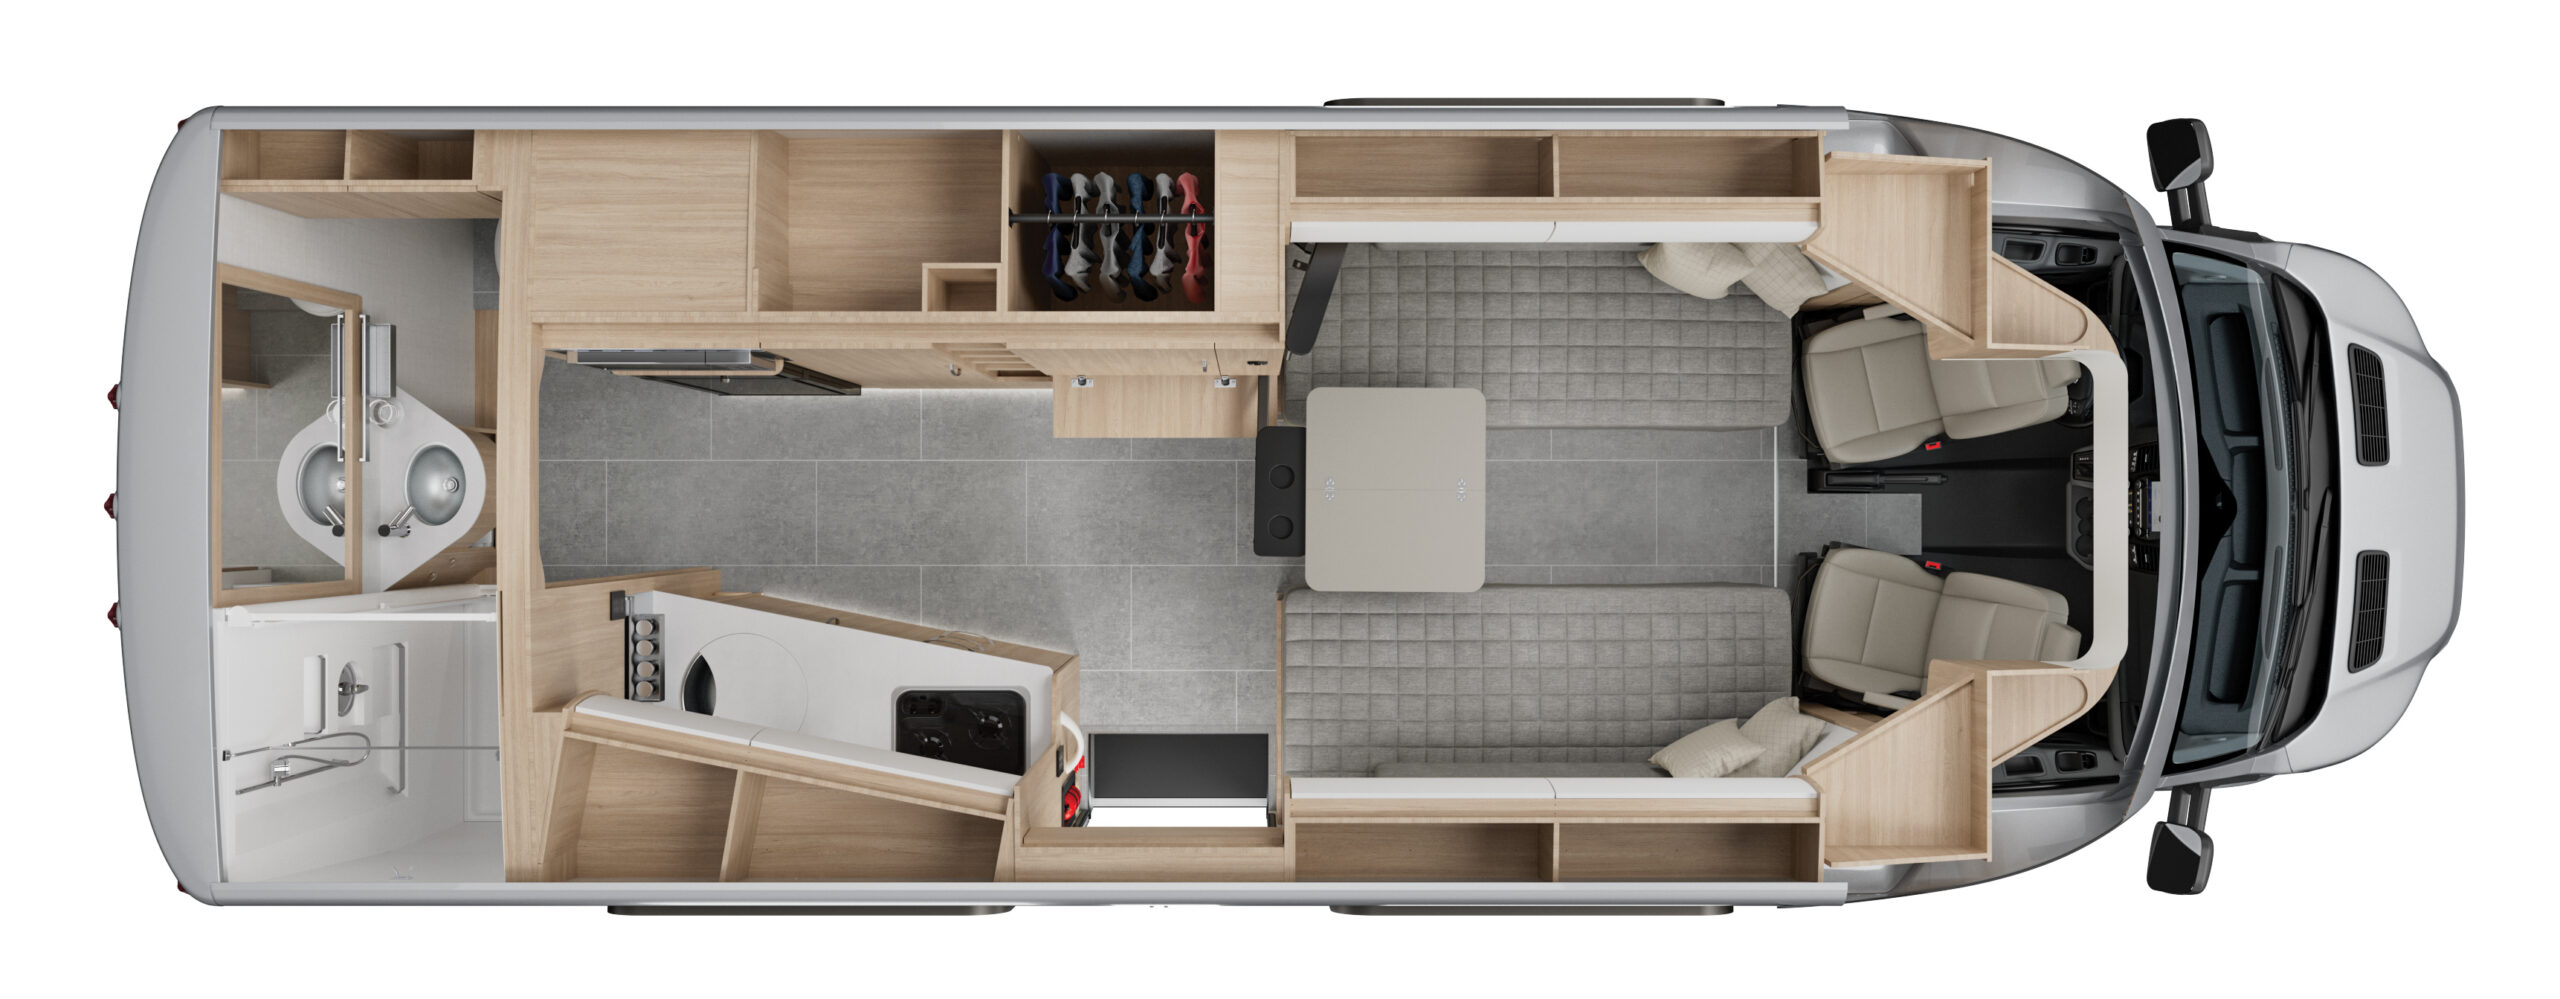 Leisure Travel Vans Wonder Front Twin Bed interior floor plan